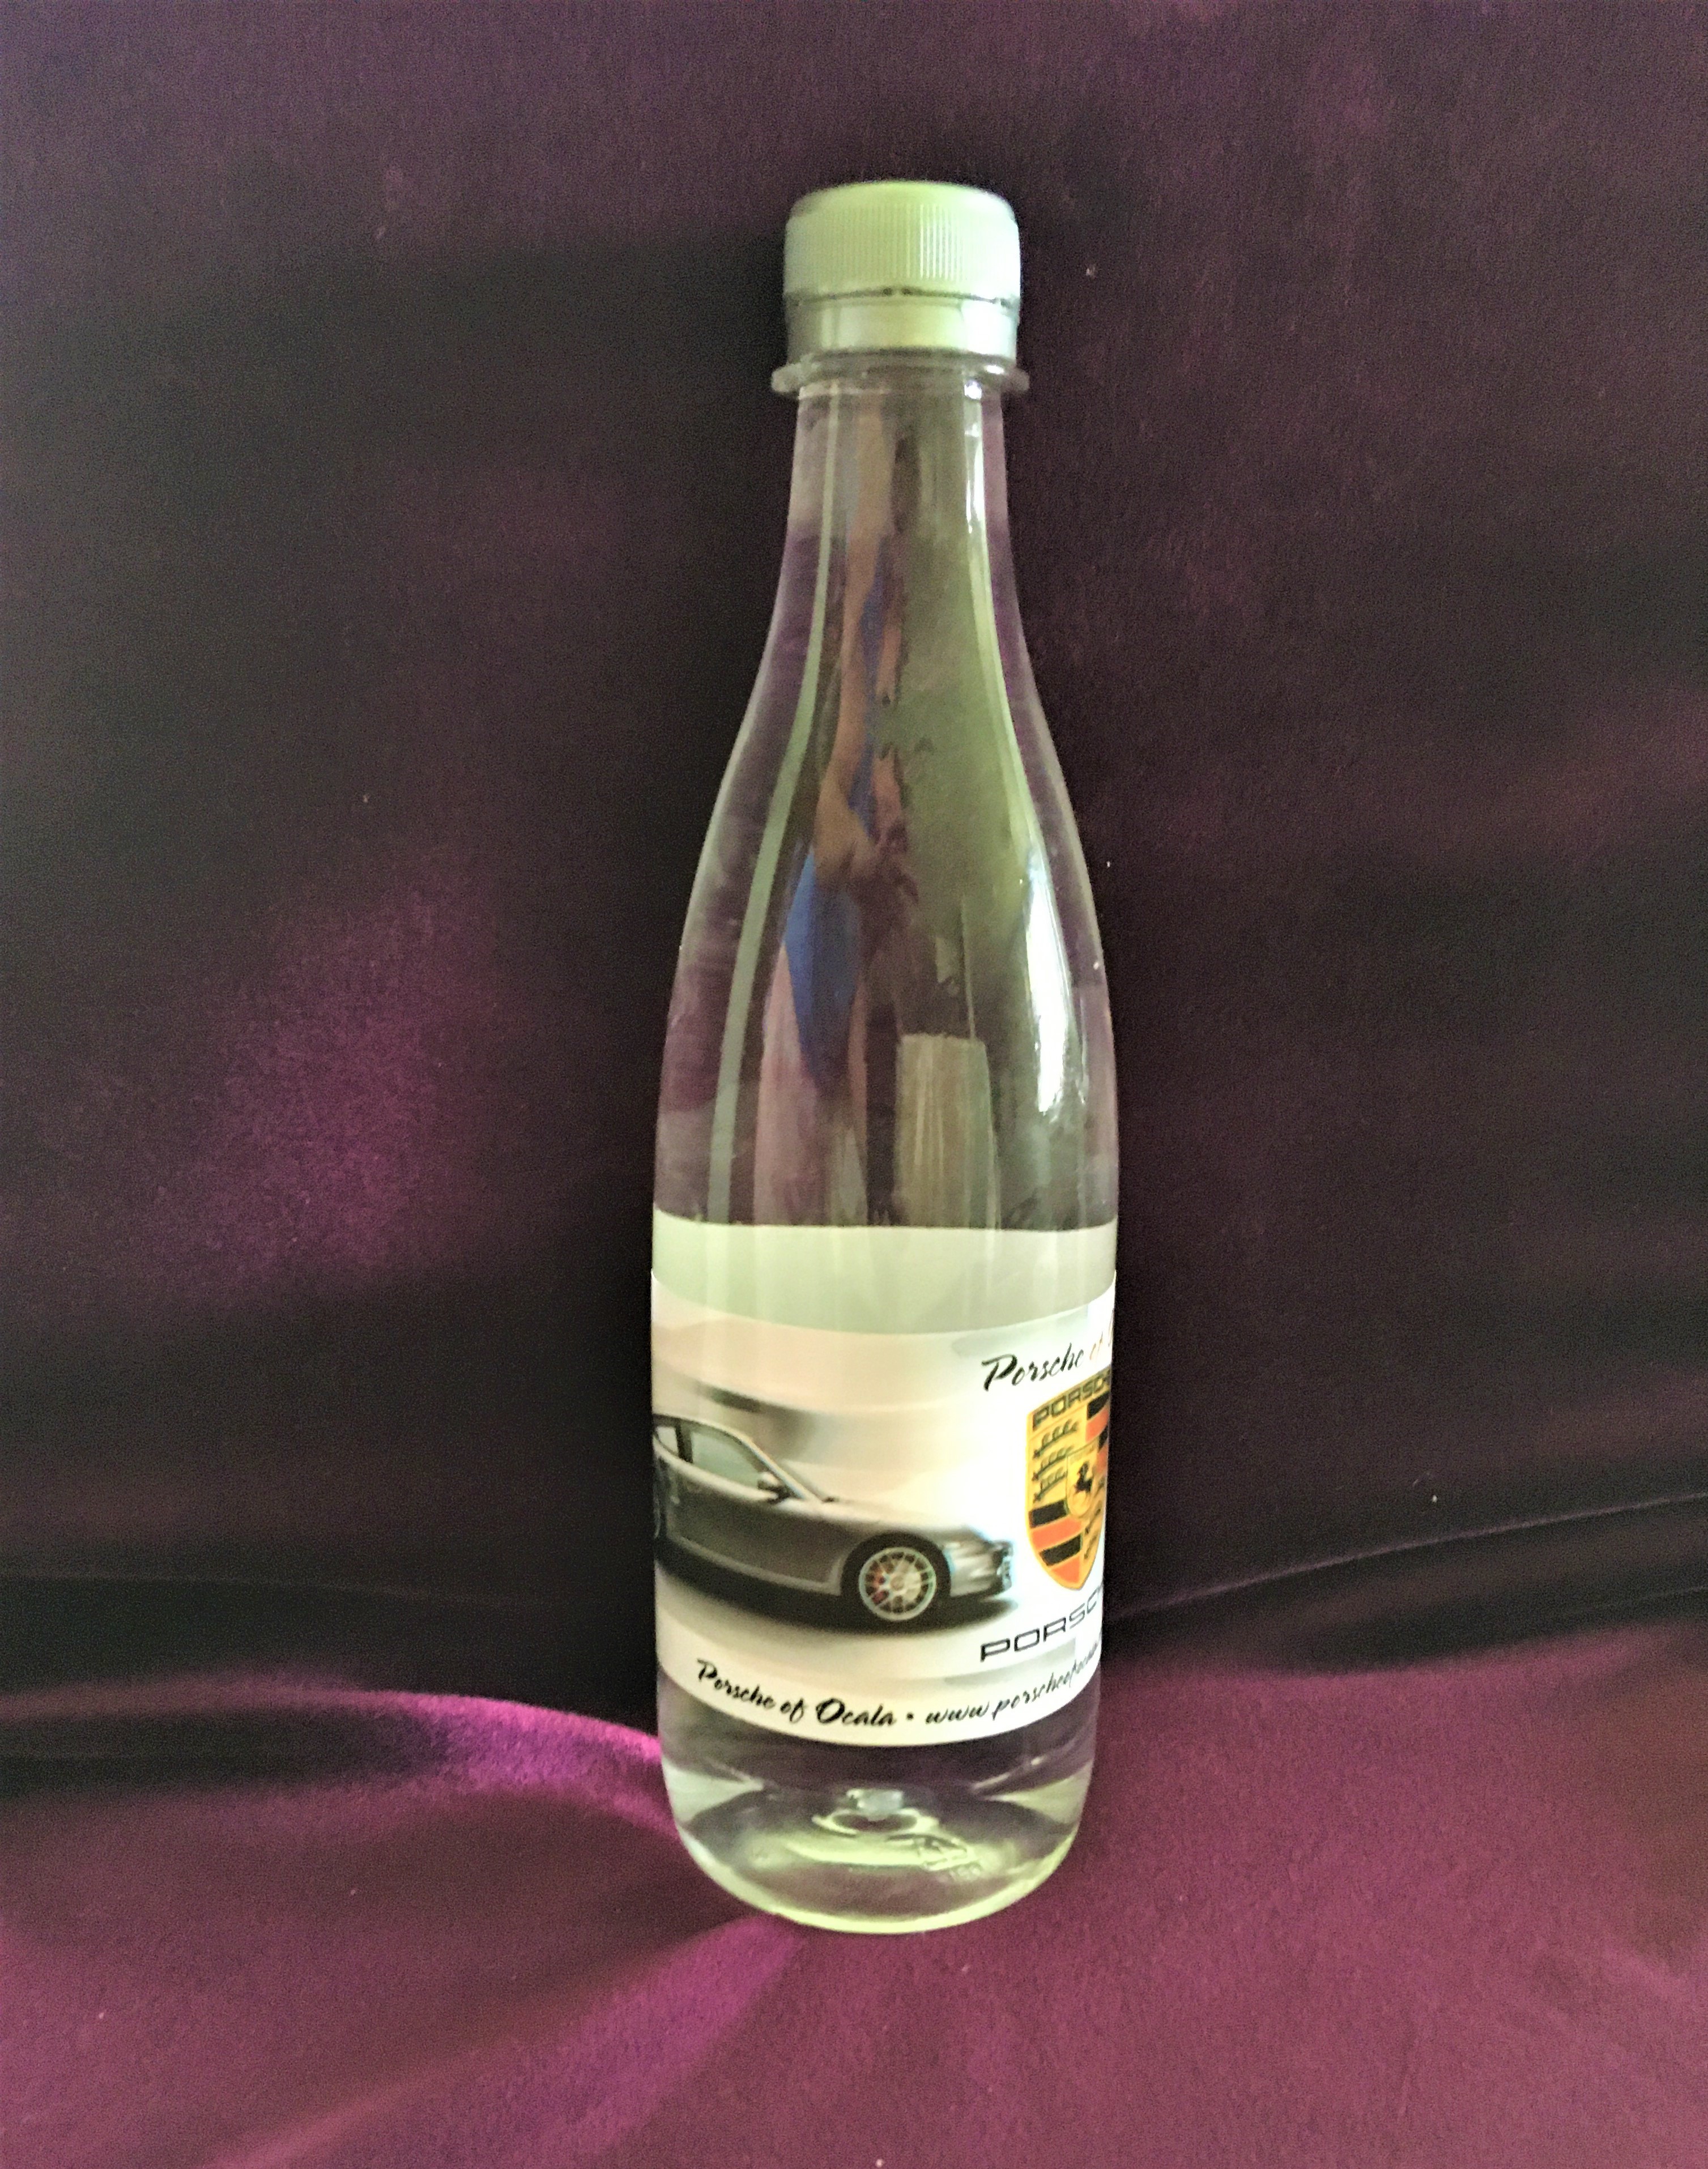 https://upload.wikimedia.org/wikipedia/commons/0/0f/Porsche_promotional_merchandize%2C_a_bottle_of_water.jpg